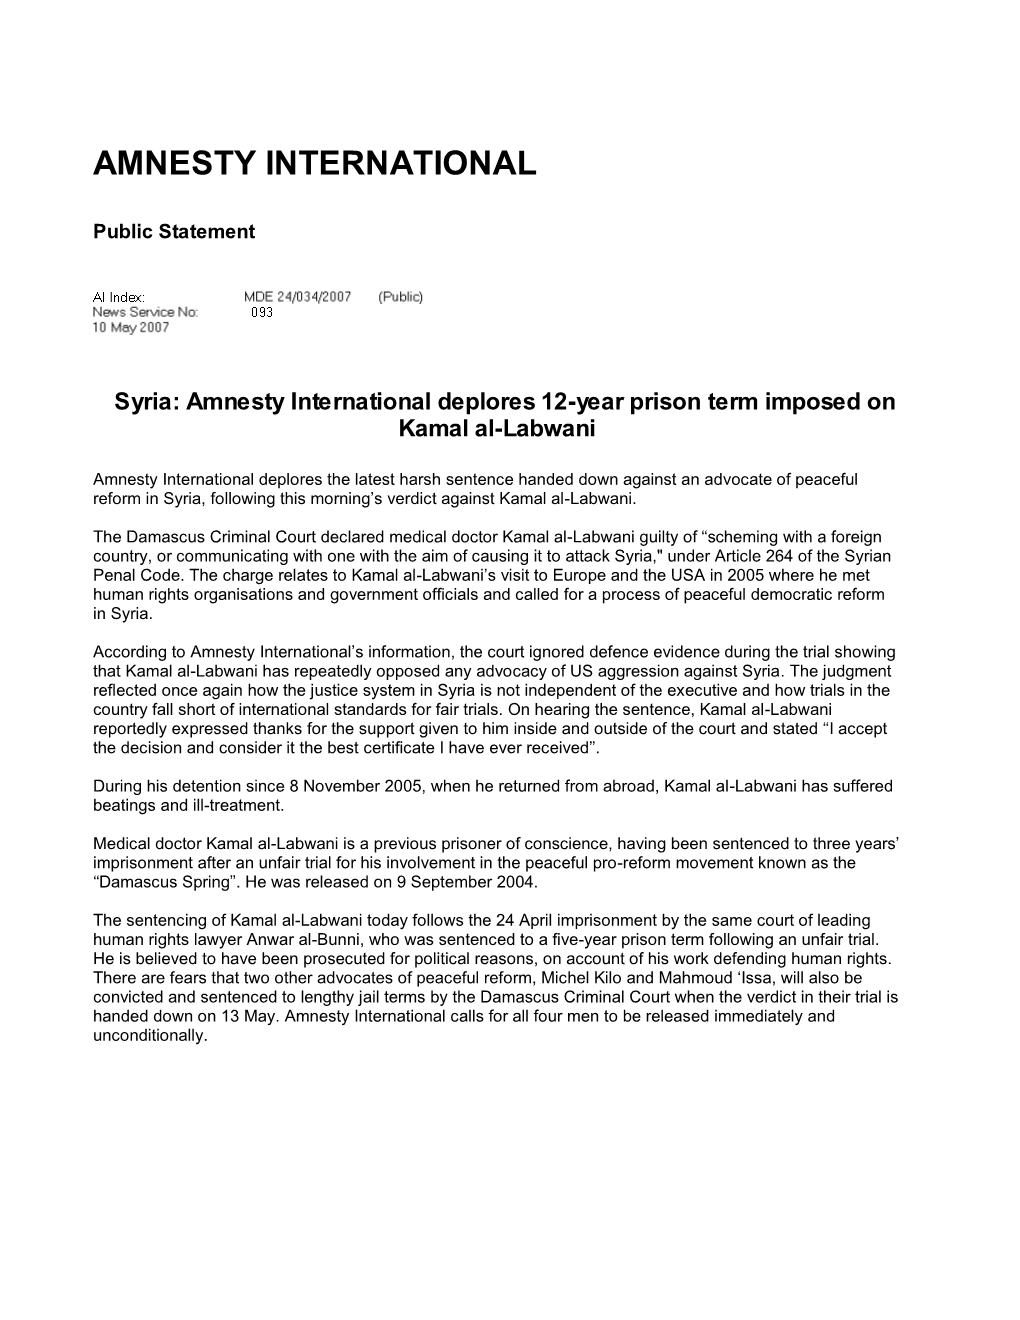 Syria: Amnesty International Deplores 12-Year Prison Term Imposed on Kamal Al-Labwani